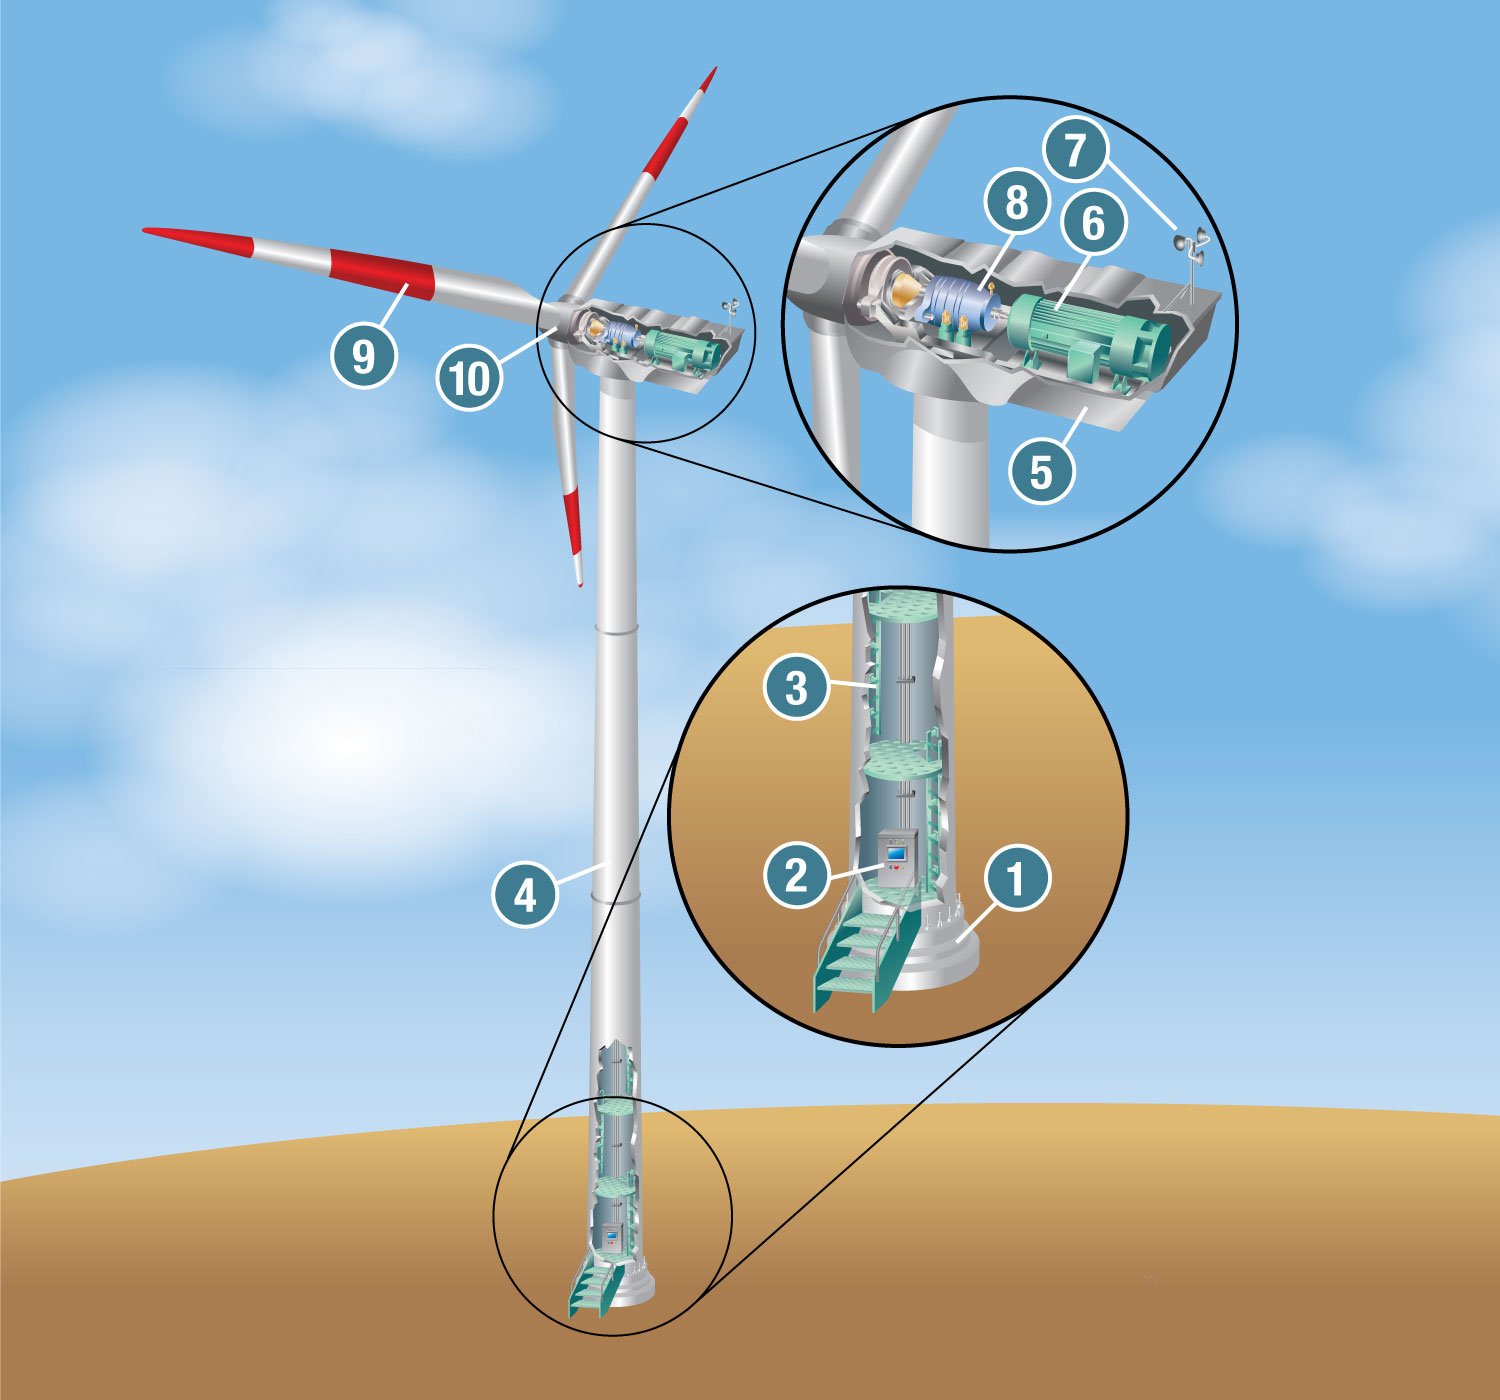 Anatomy of a wind tower/turbine